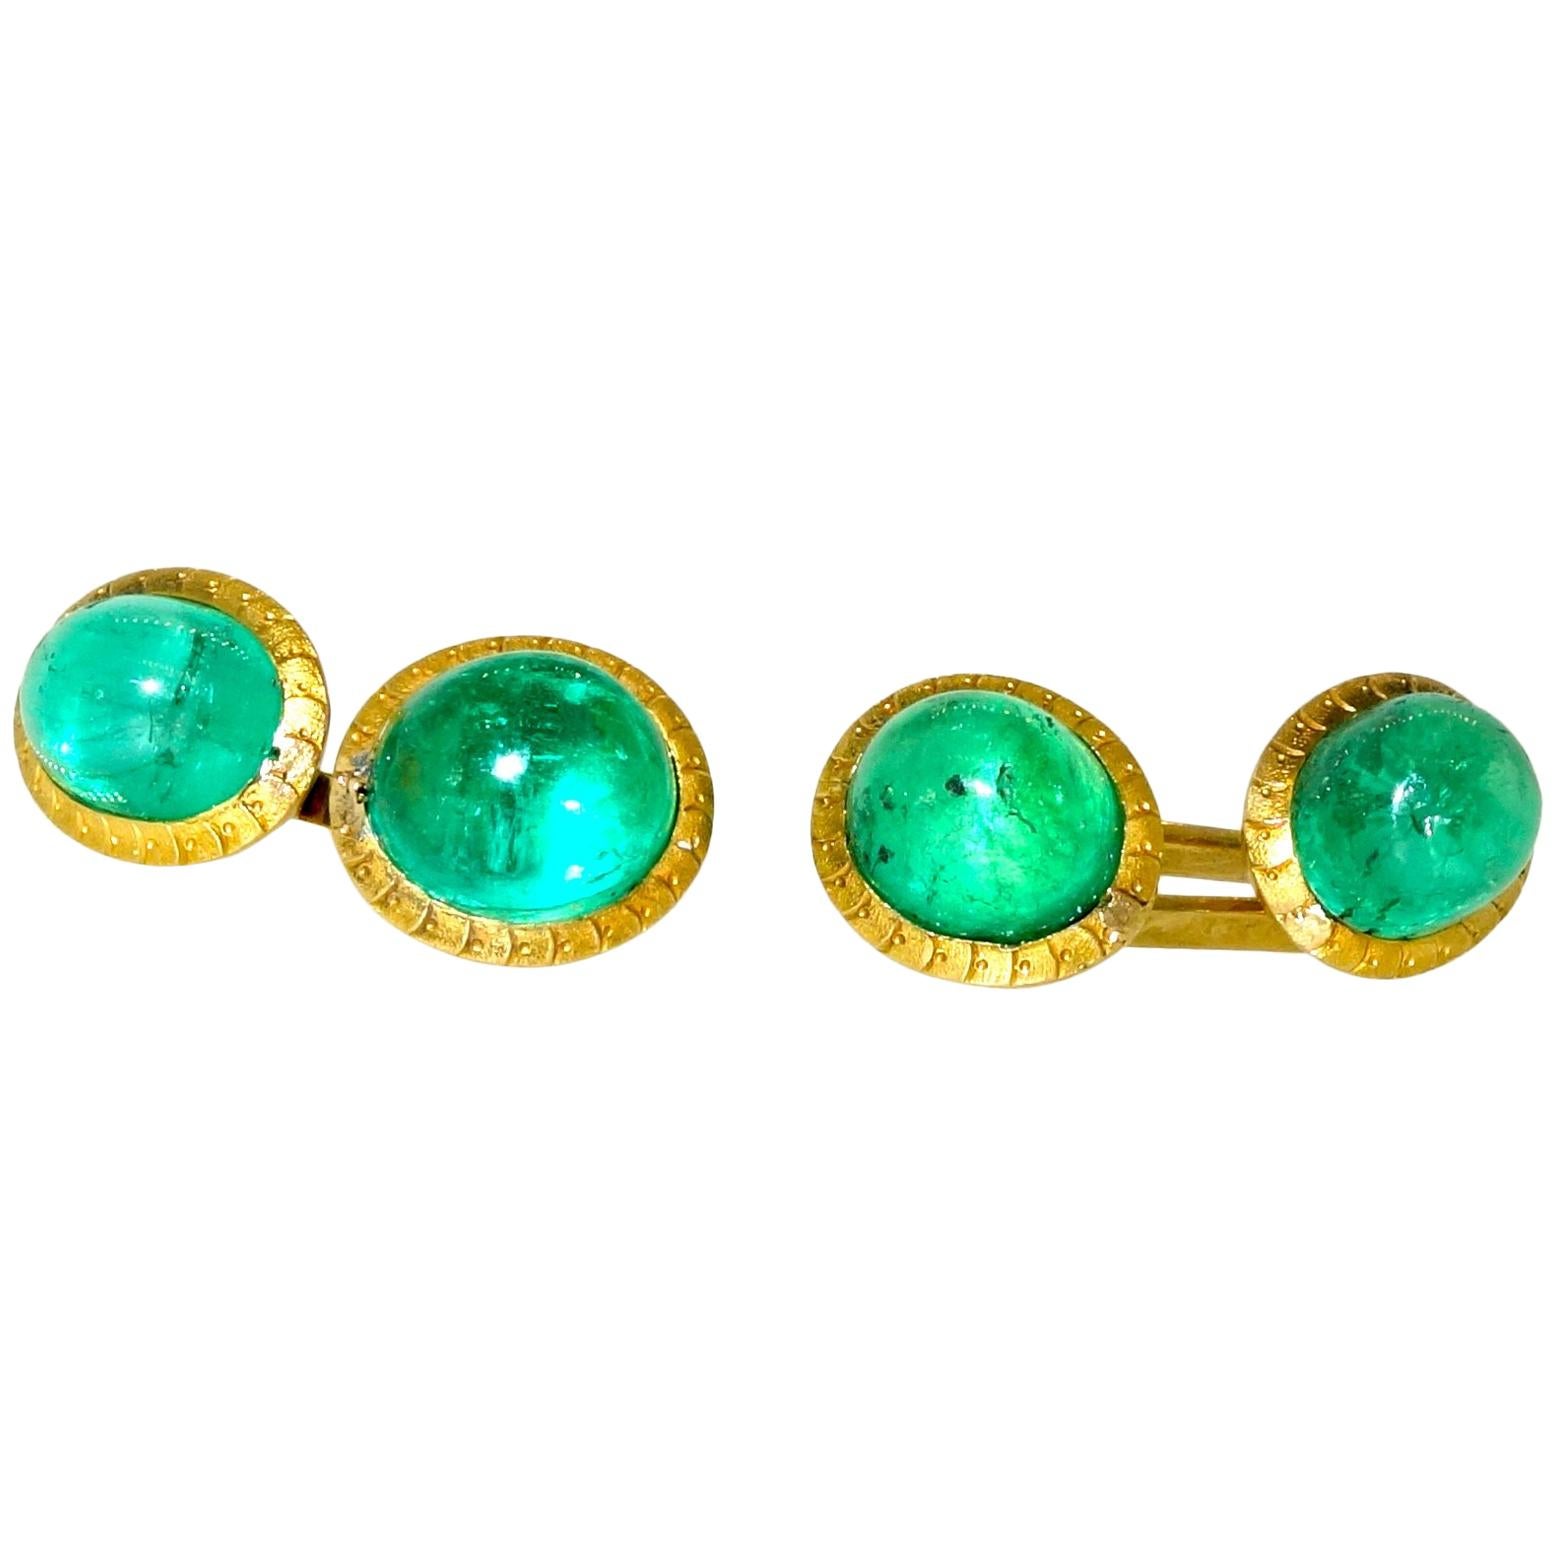 Emerald and Gold Cufflinks, circa 1890